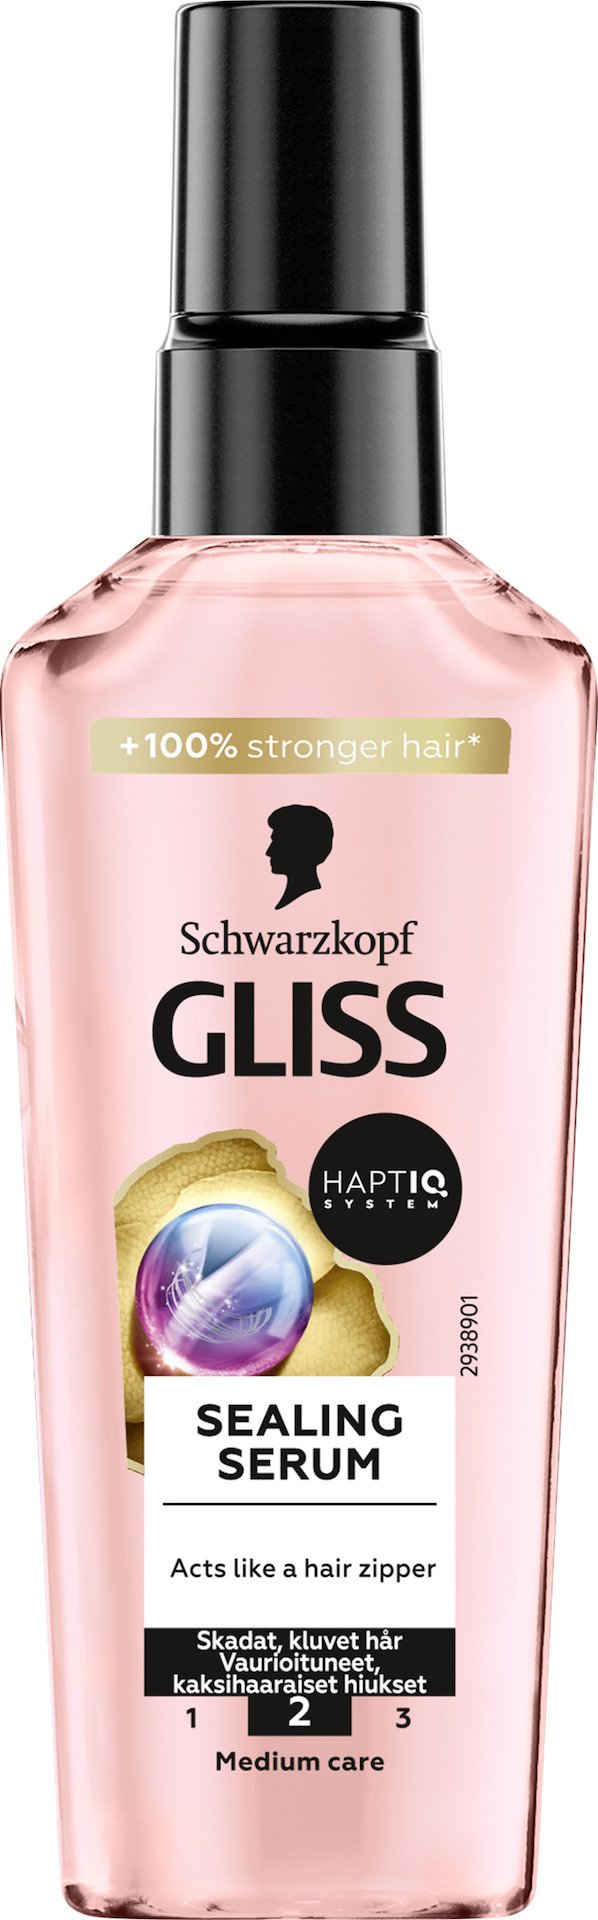 Schwarzkopf Gliss Sealing Serum 75 ml